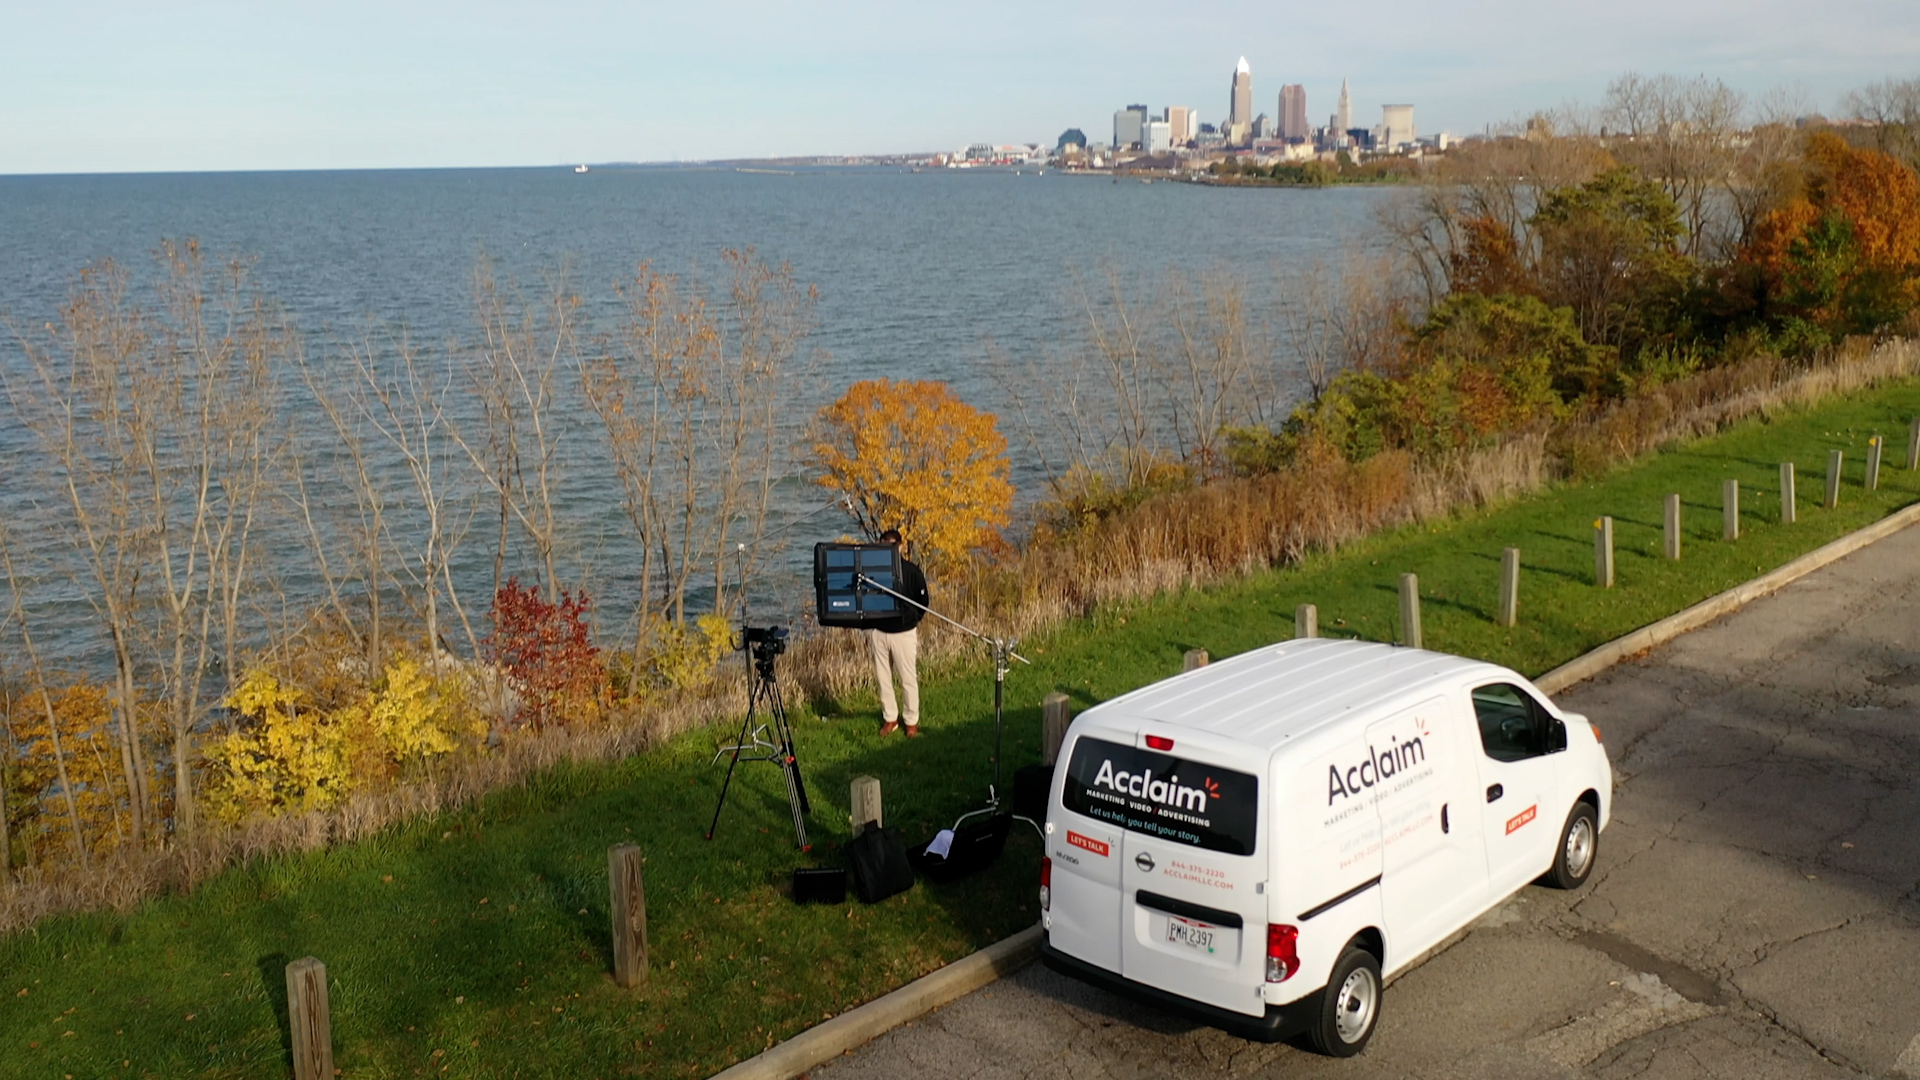 The Acclaim van filming on Lake Erie